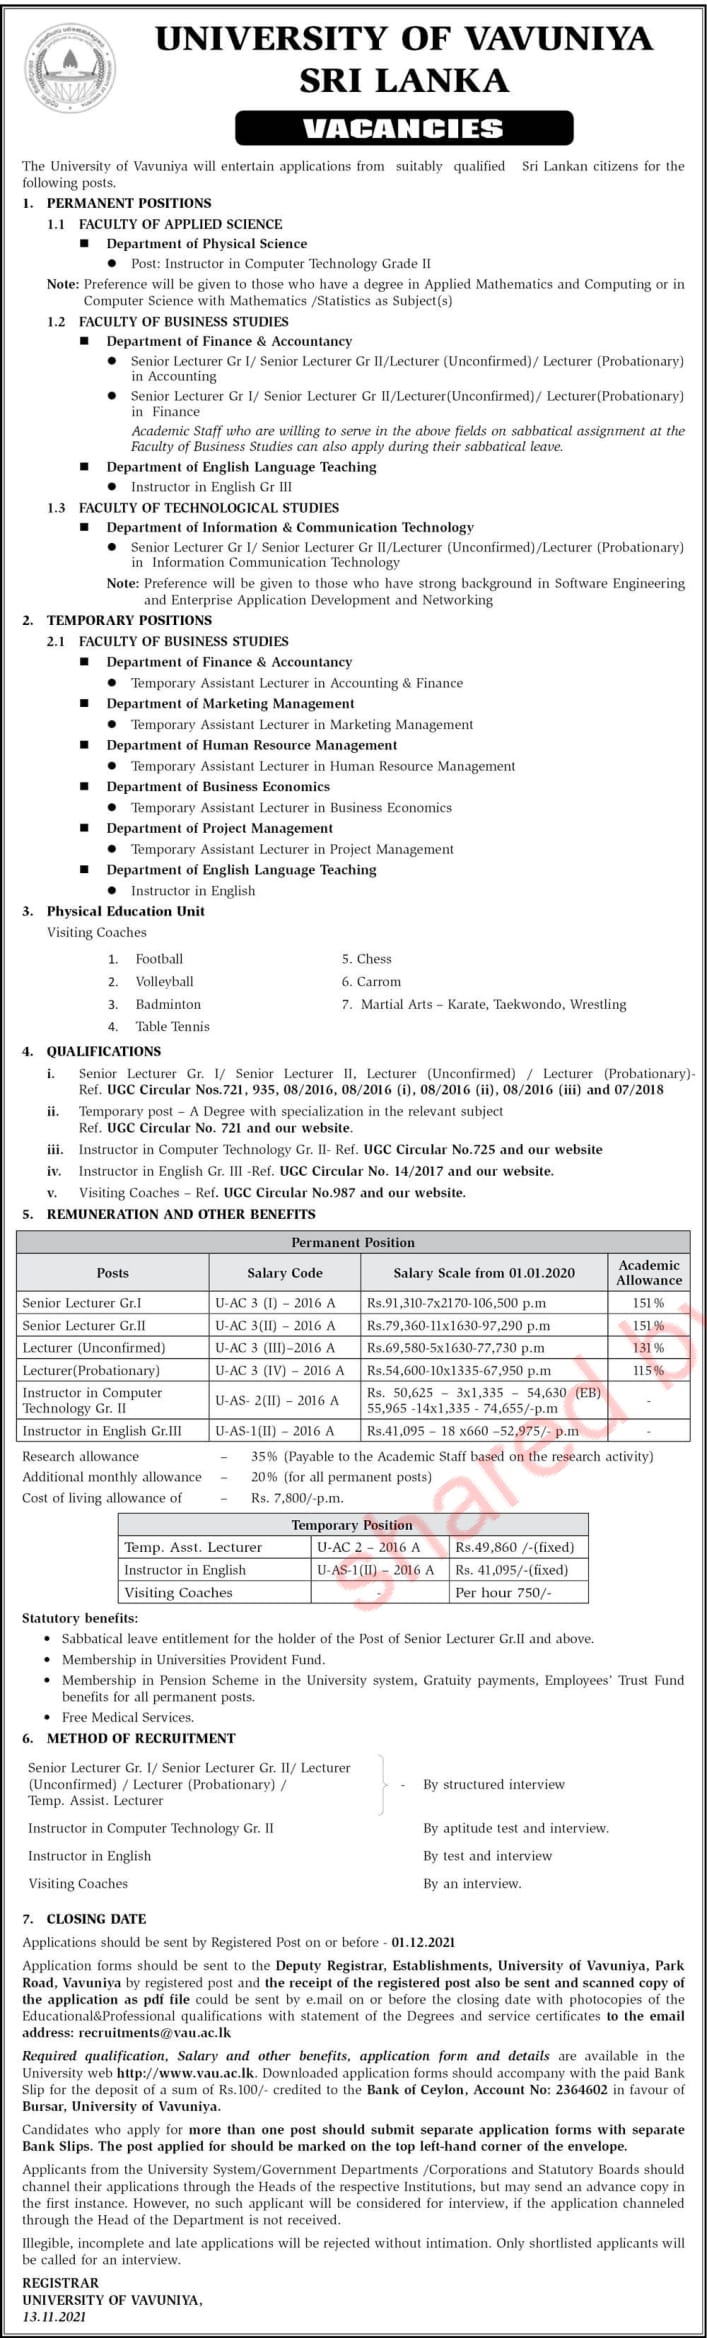 Academic Vacancies in Sri Lankan Universities (15 Nov 2021) 